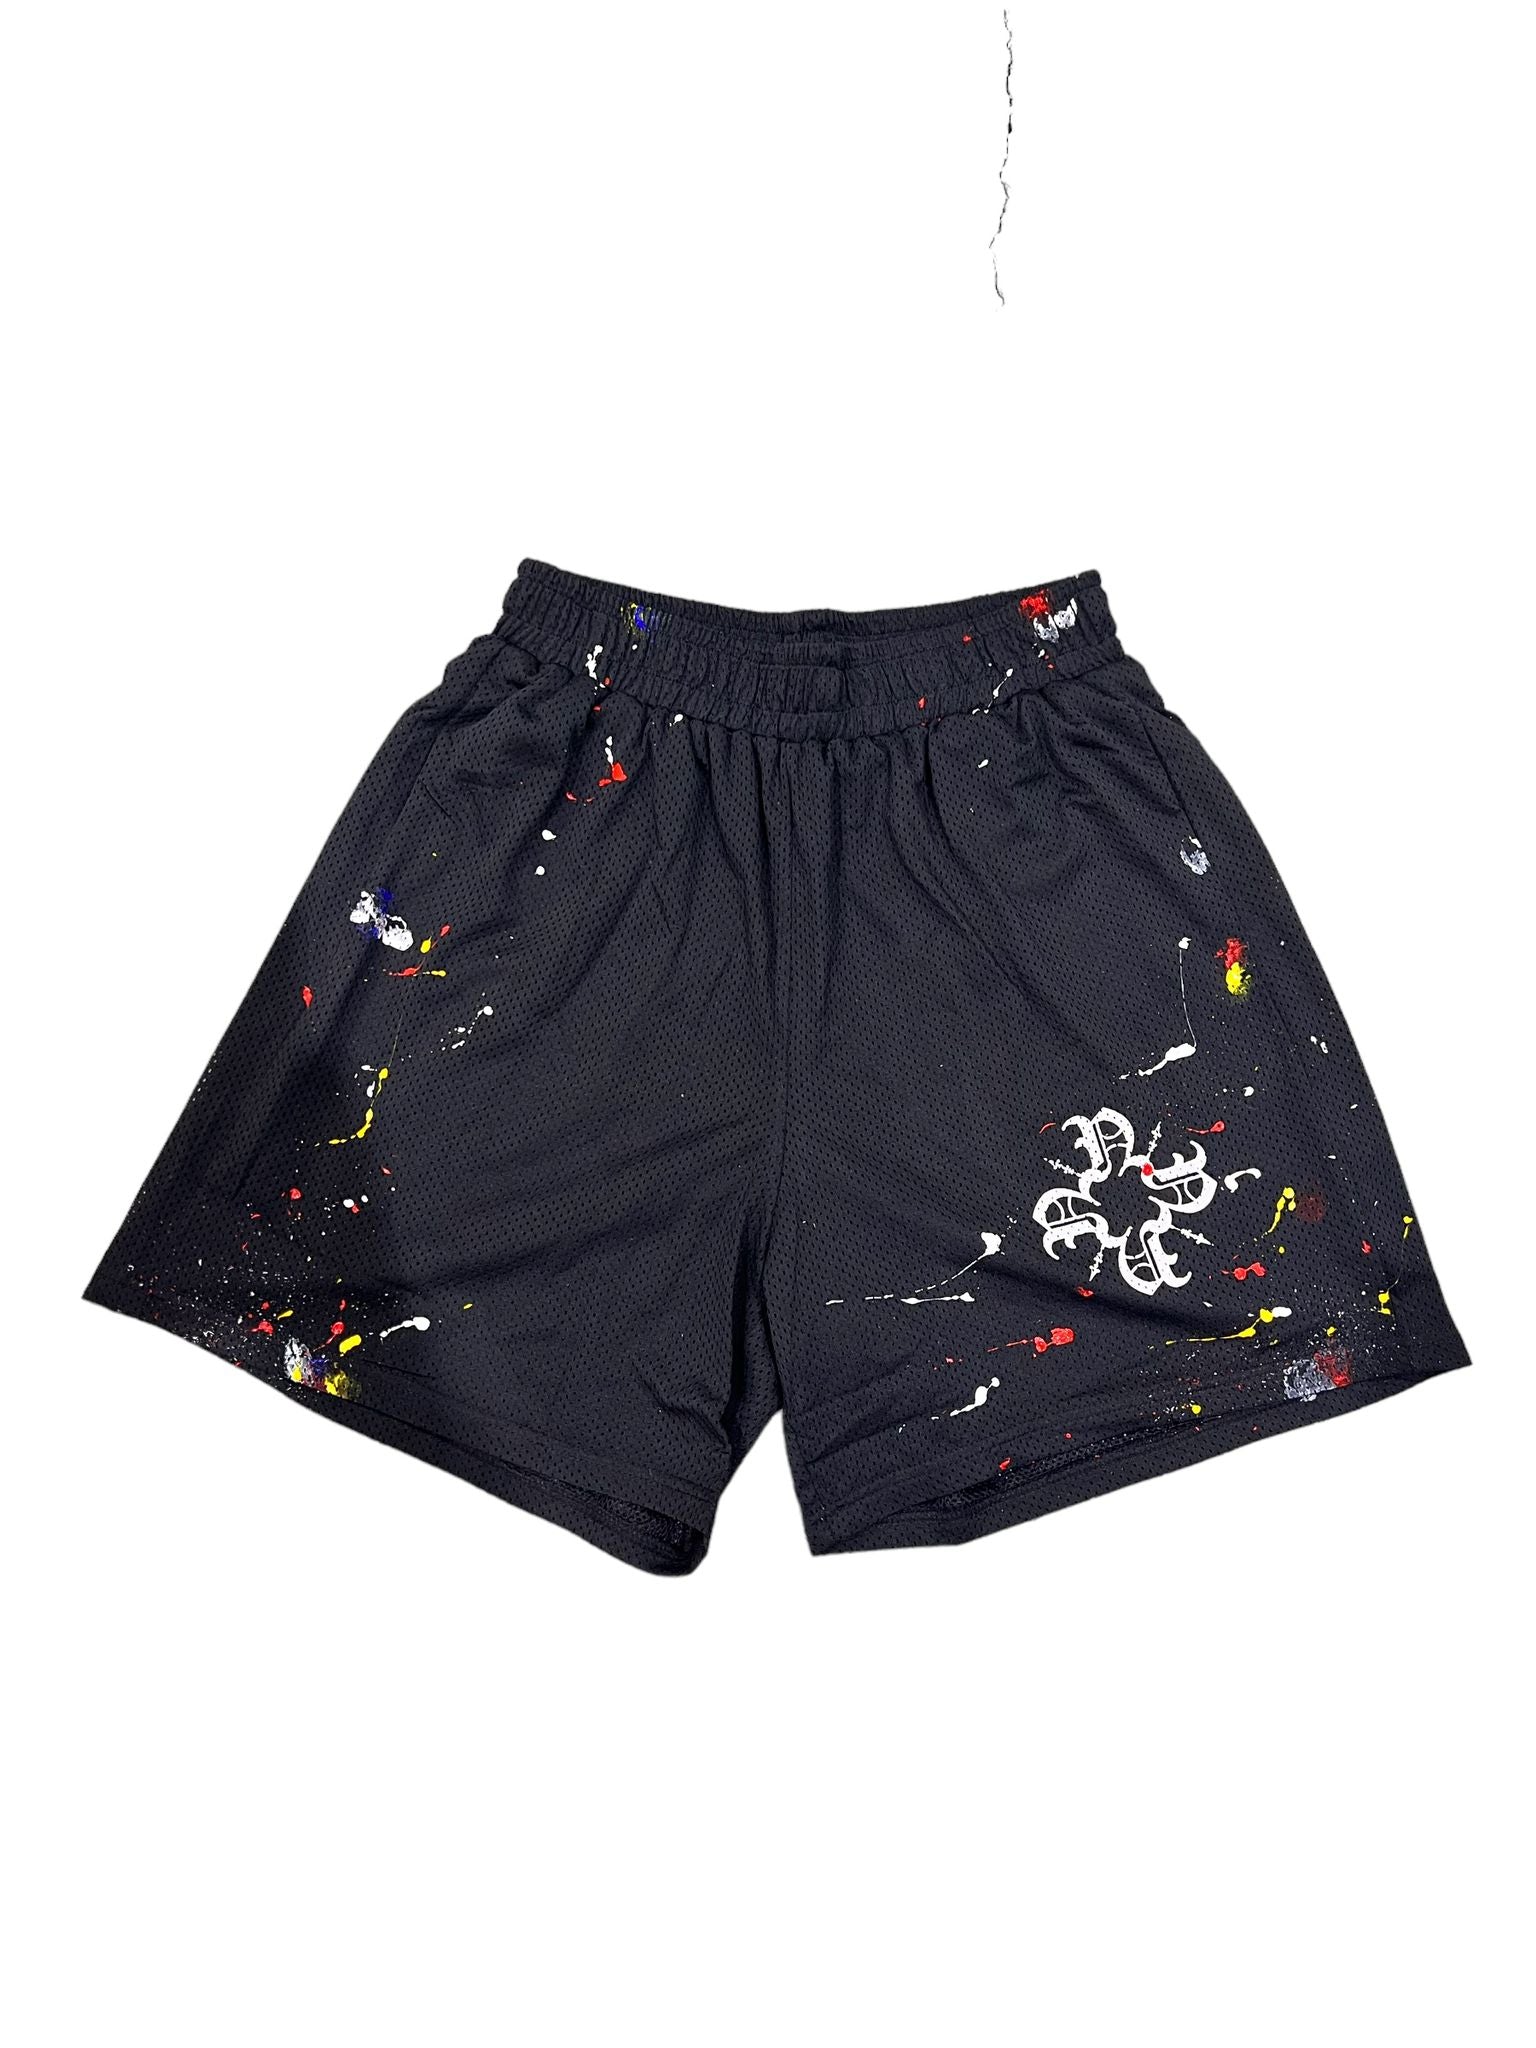 Custom Black Mesh Shorts w/ Paint Splatter - Large